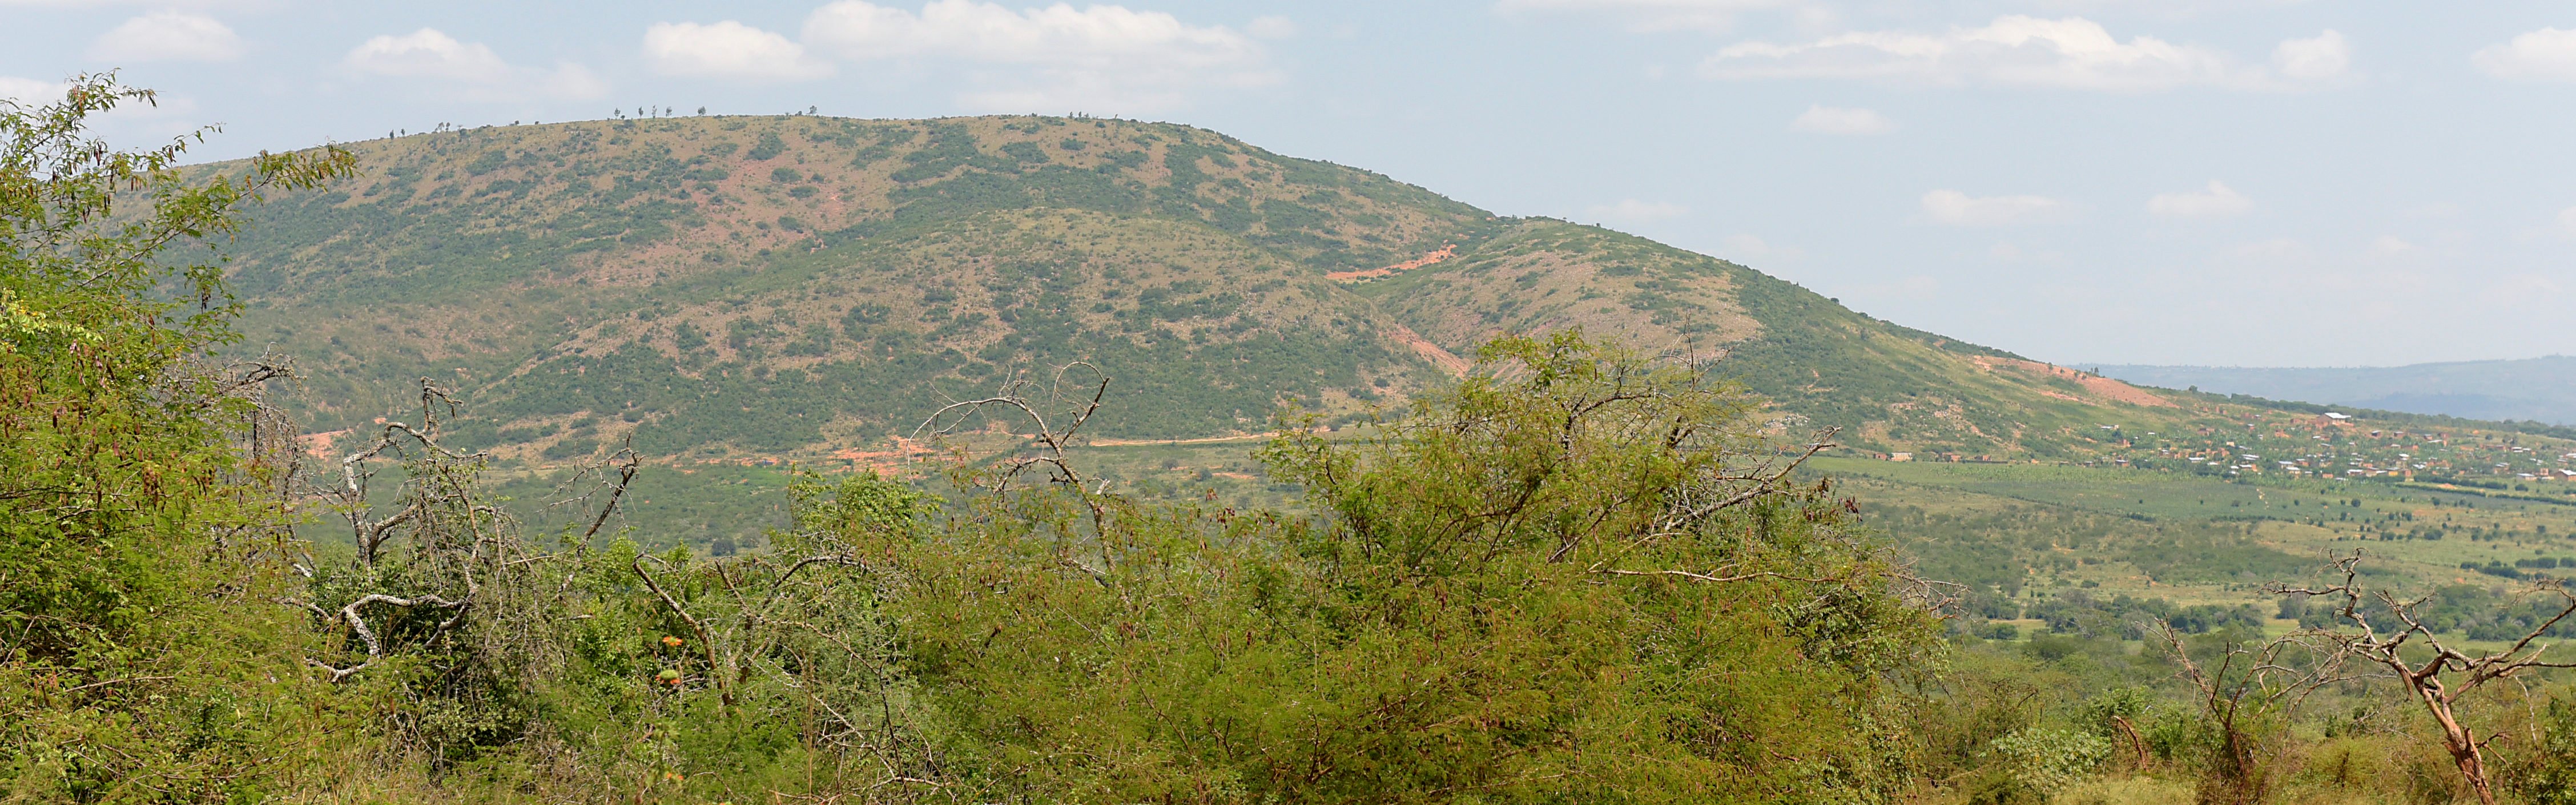 akagera-national-park-rwanda